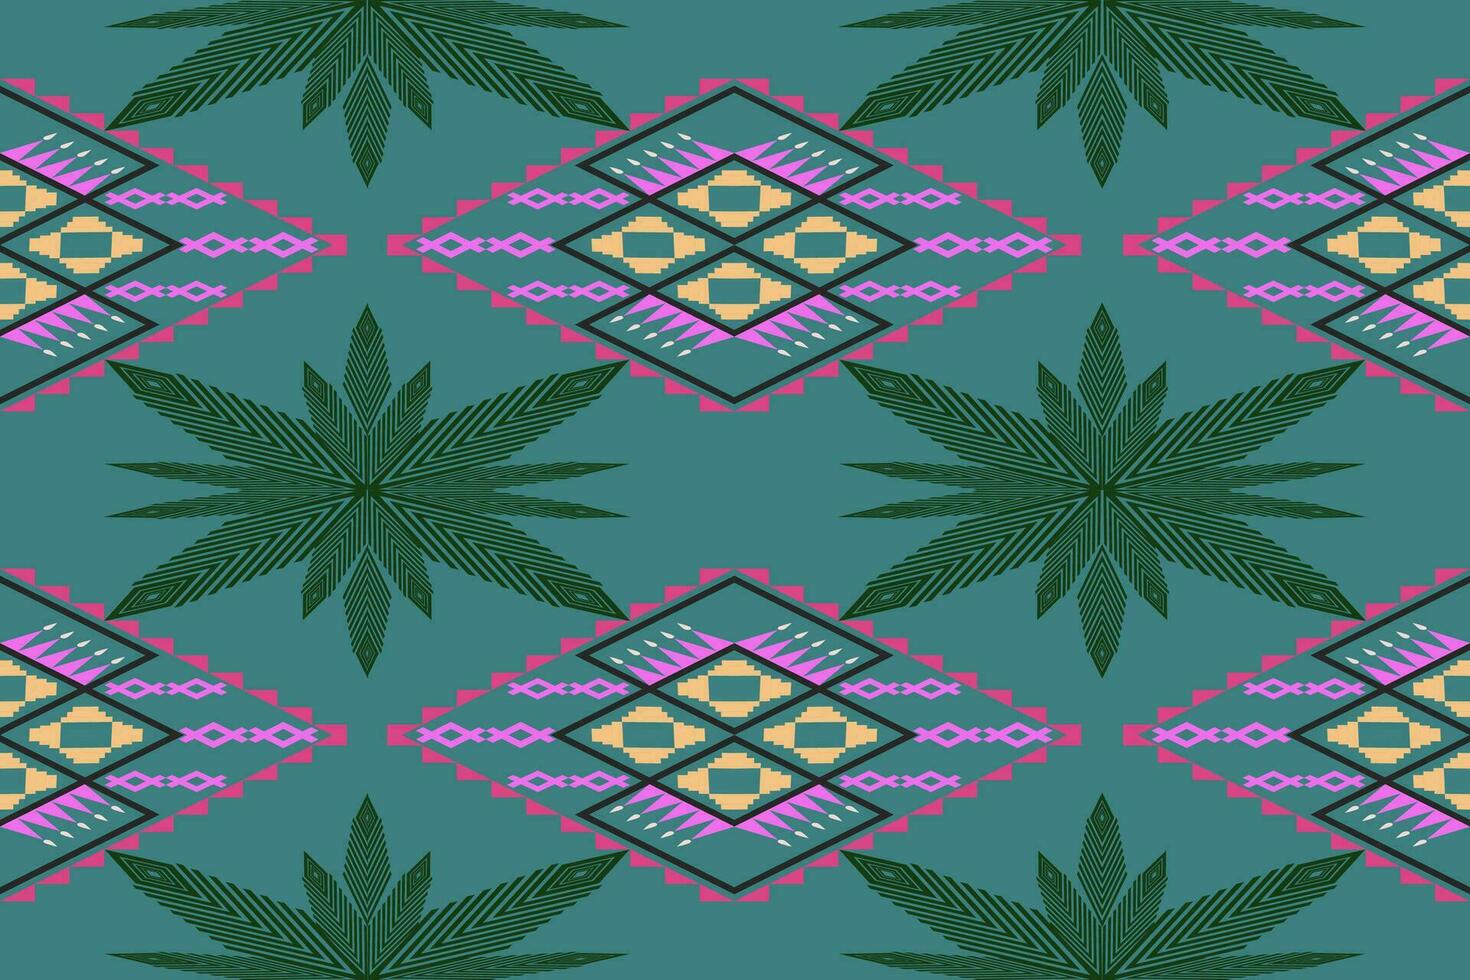 étnico tradicional elegante ornamental multi colorida geométrico padronizar fundo Projeto fronteira têxtil impressão para textura,tecido,vestuário,embrulho,tapete. vetor